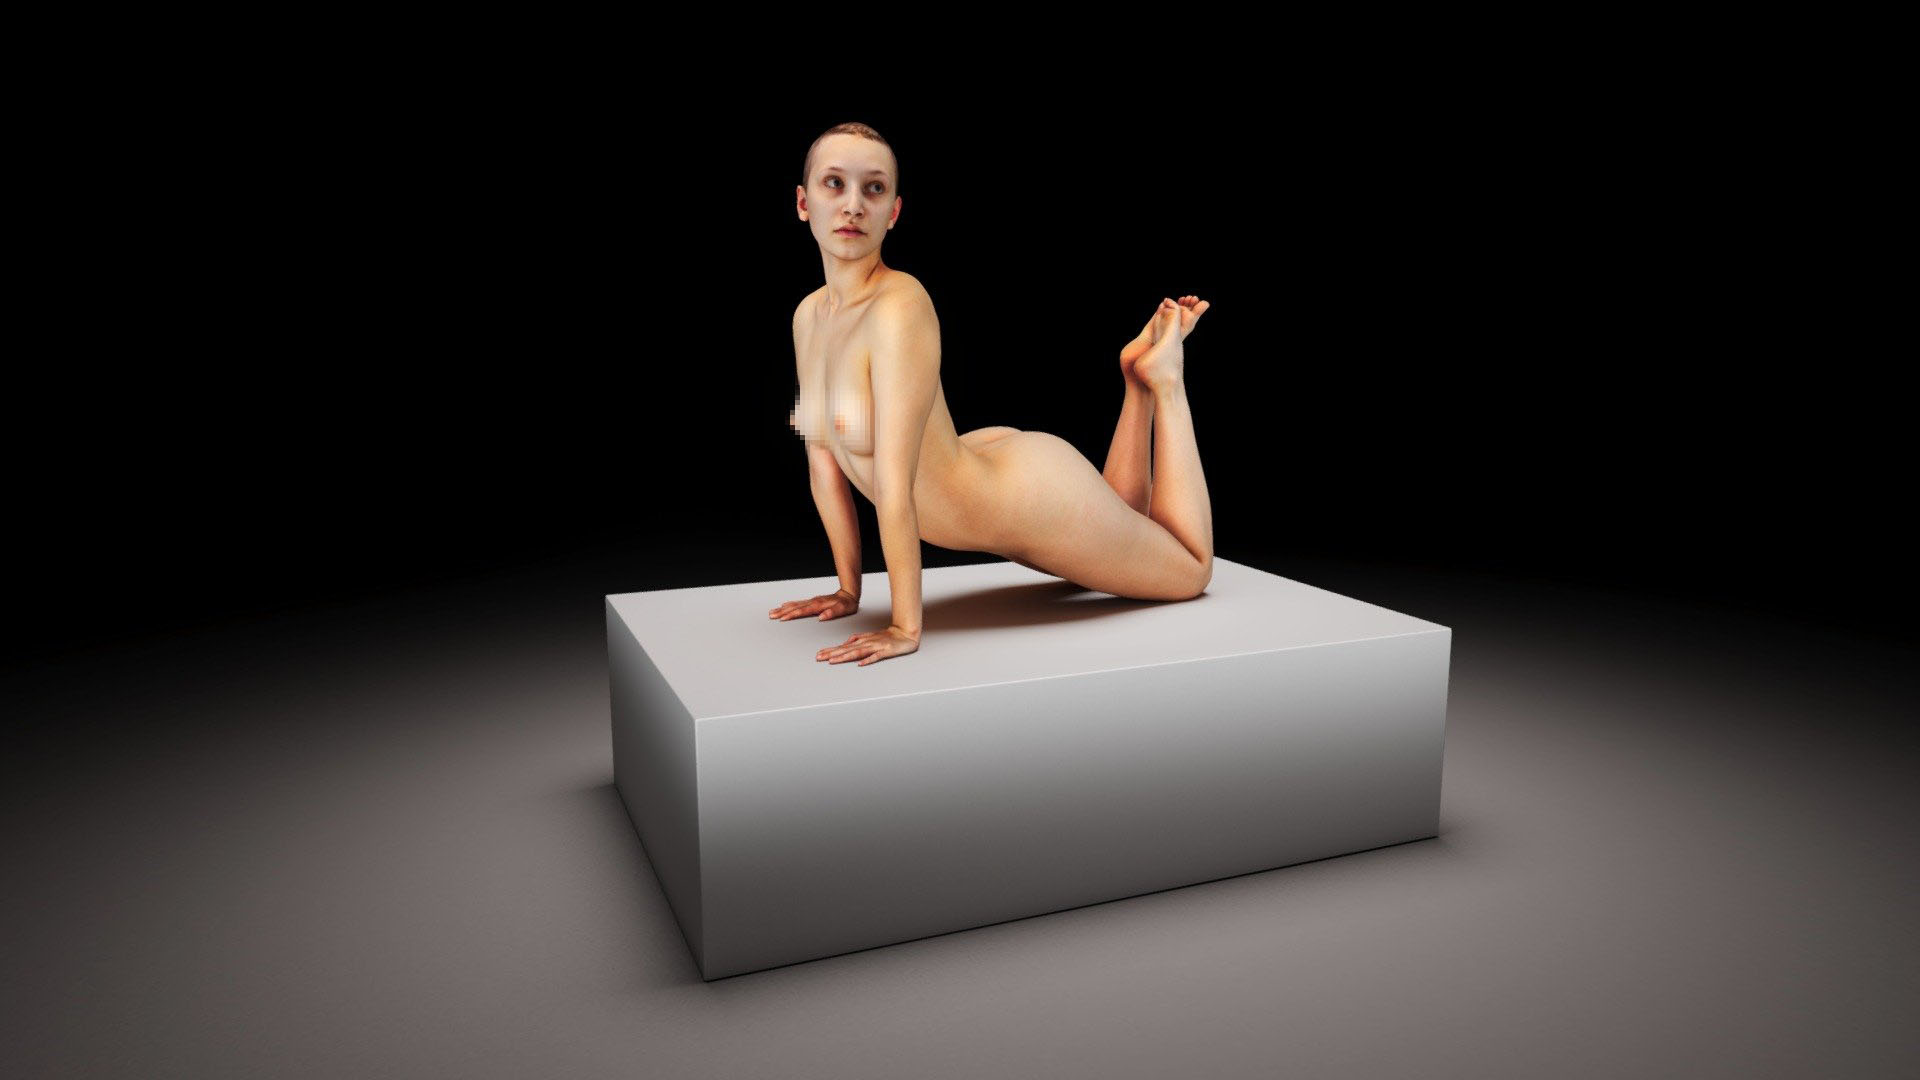 becky model kneeling nude on a white block